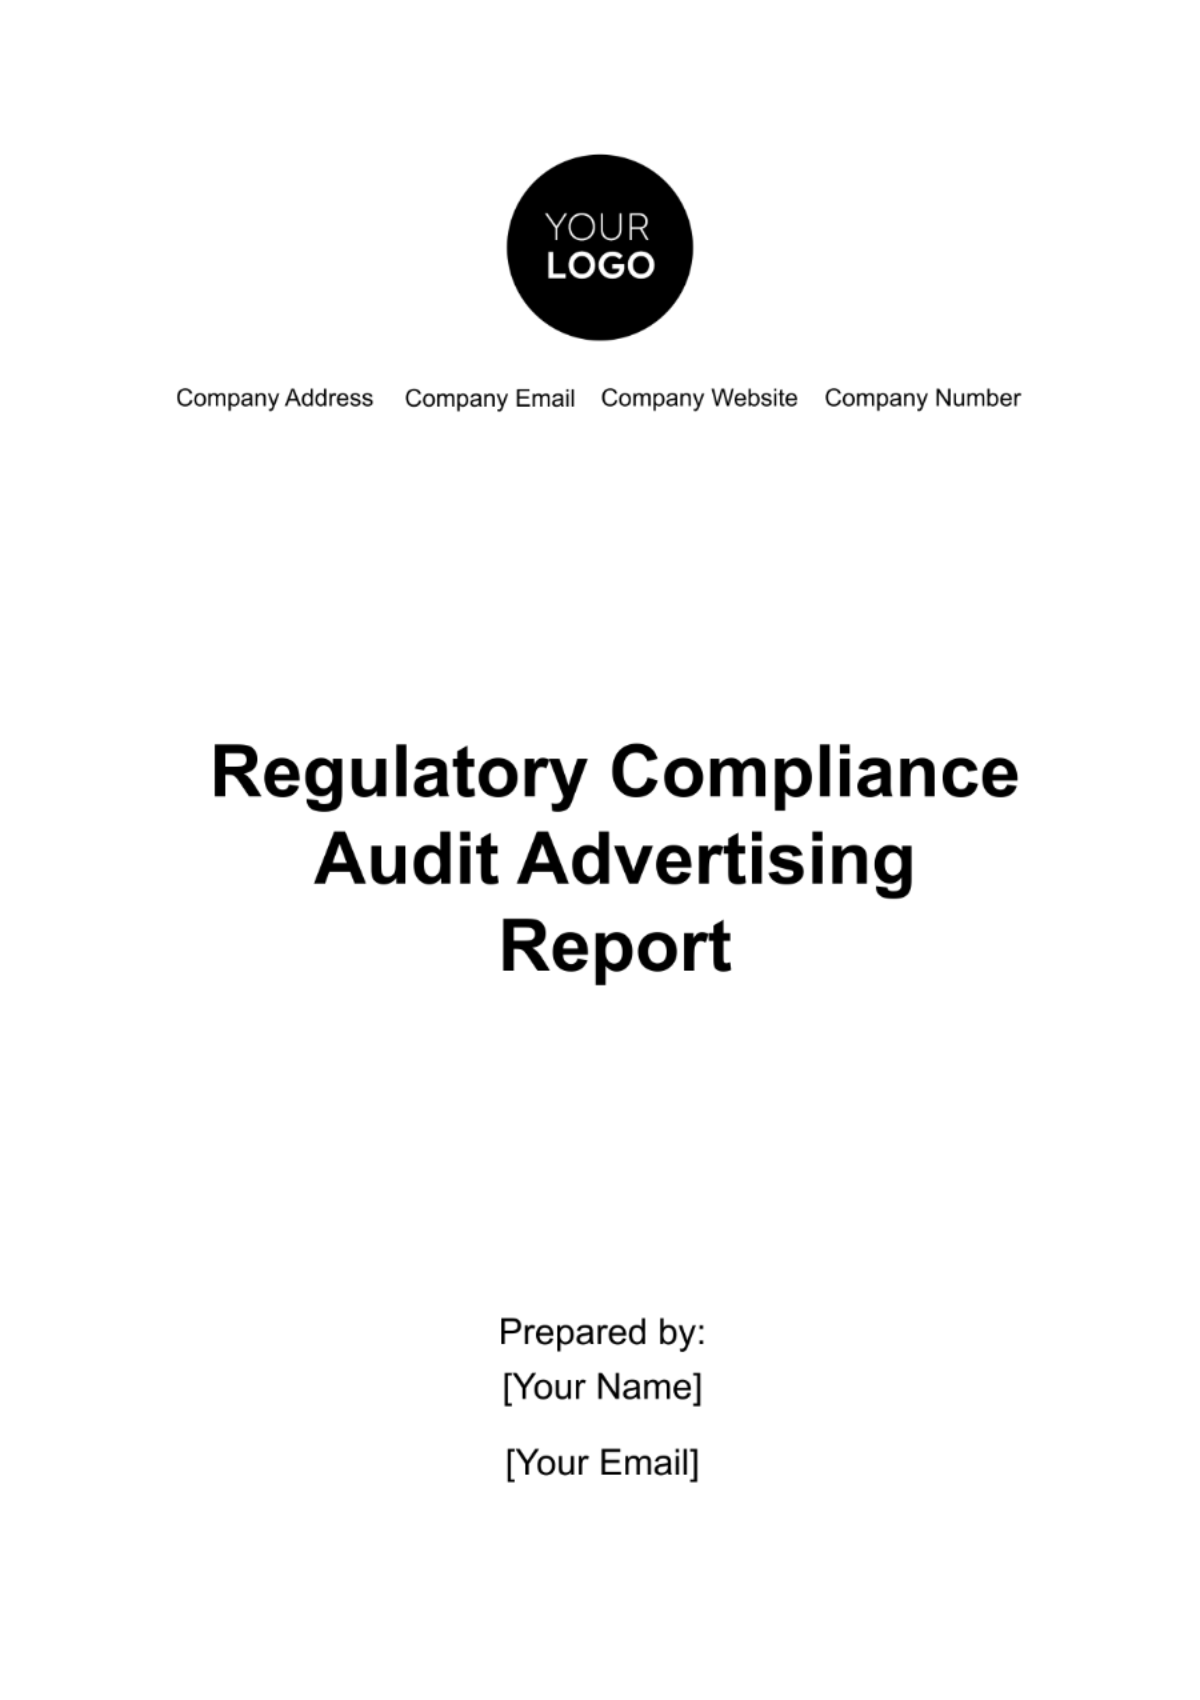 Free Regulatory Compliance Audit Advertising Report Template